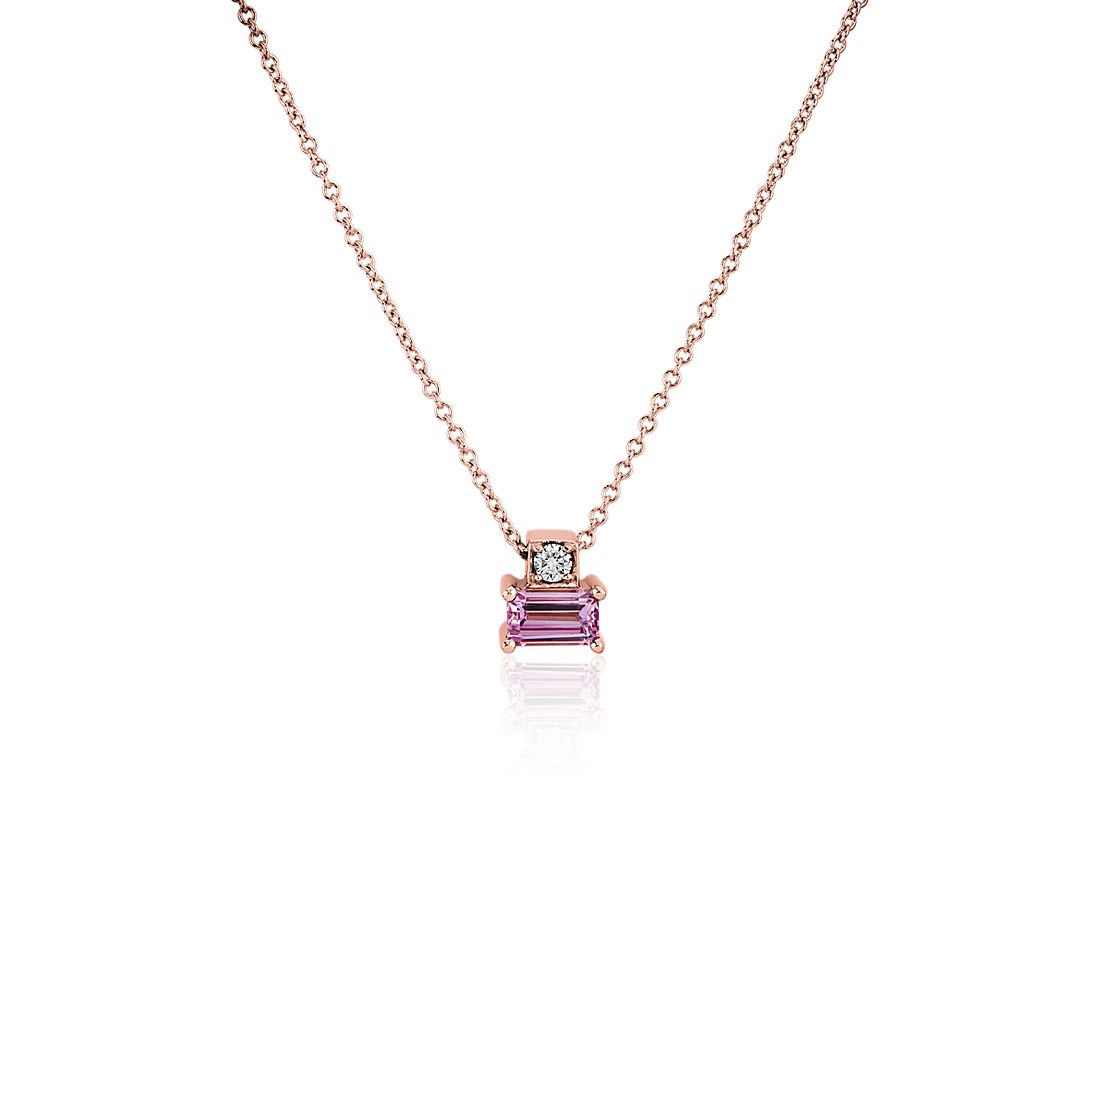 Details about   Bezel Set 1 CT Pink Sapphire Solitaire Pendant Necklace 14k Rose Gold Finish